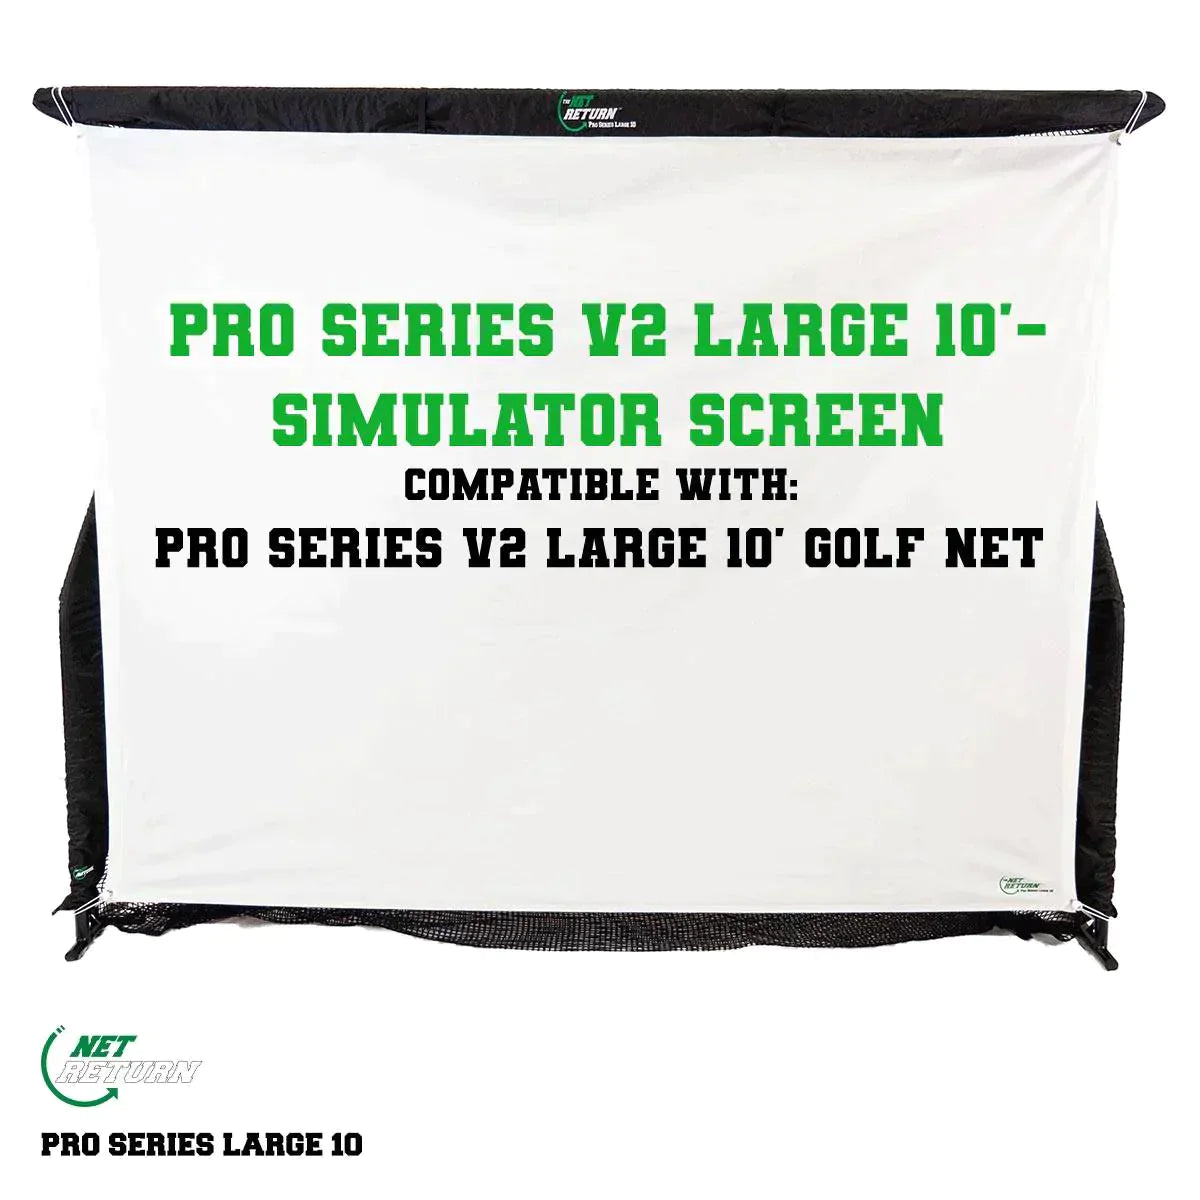 Pro Series V2 Large 10 Simulator Screen